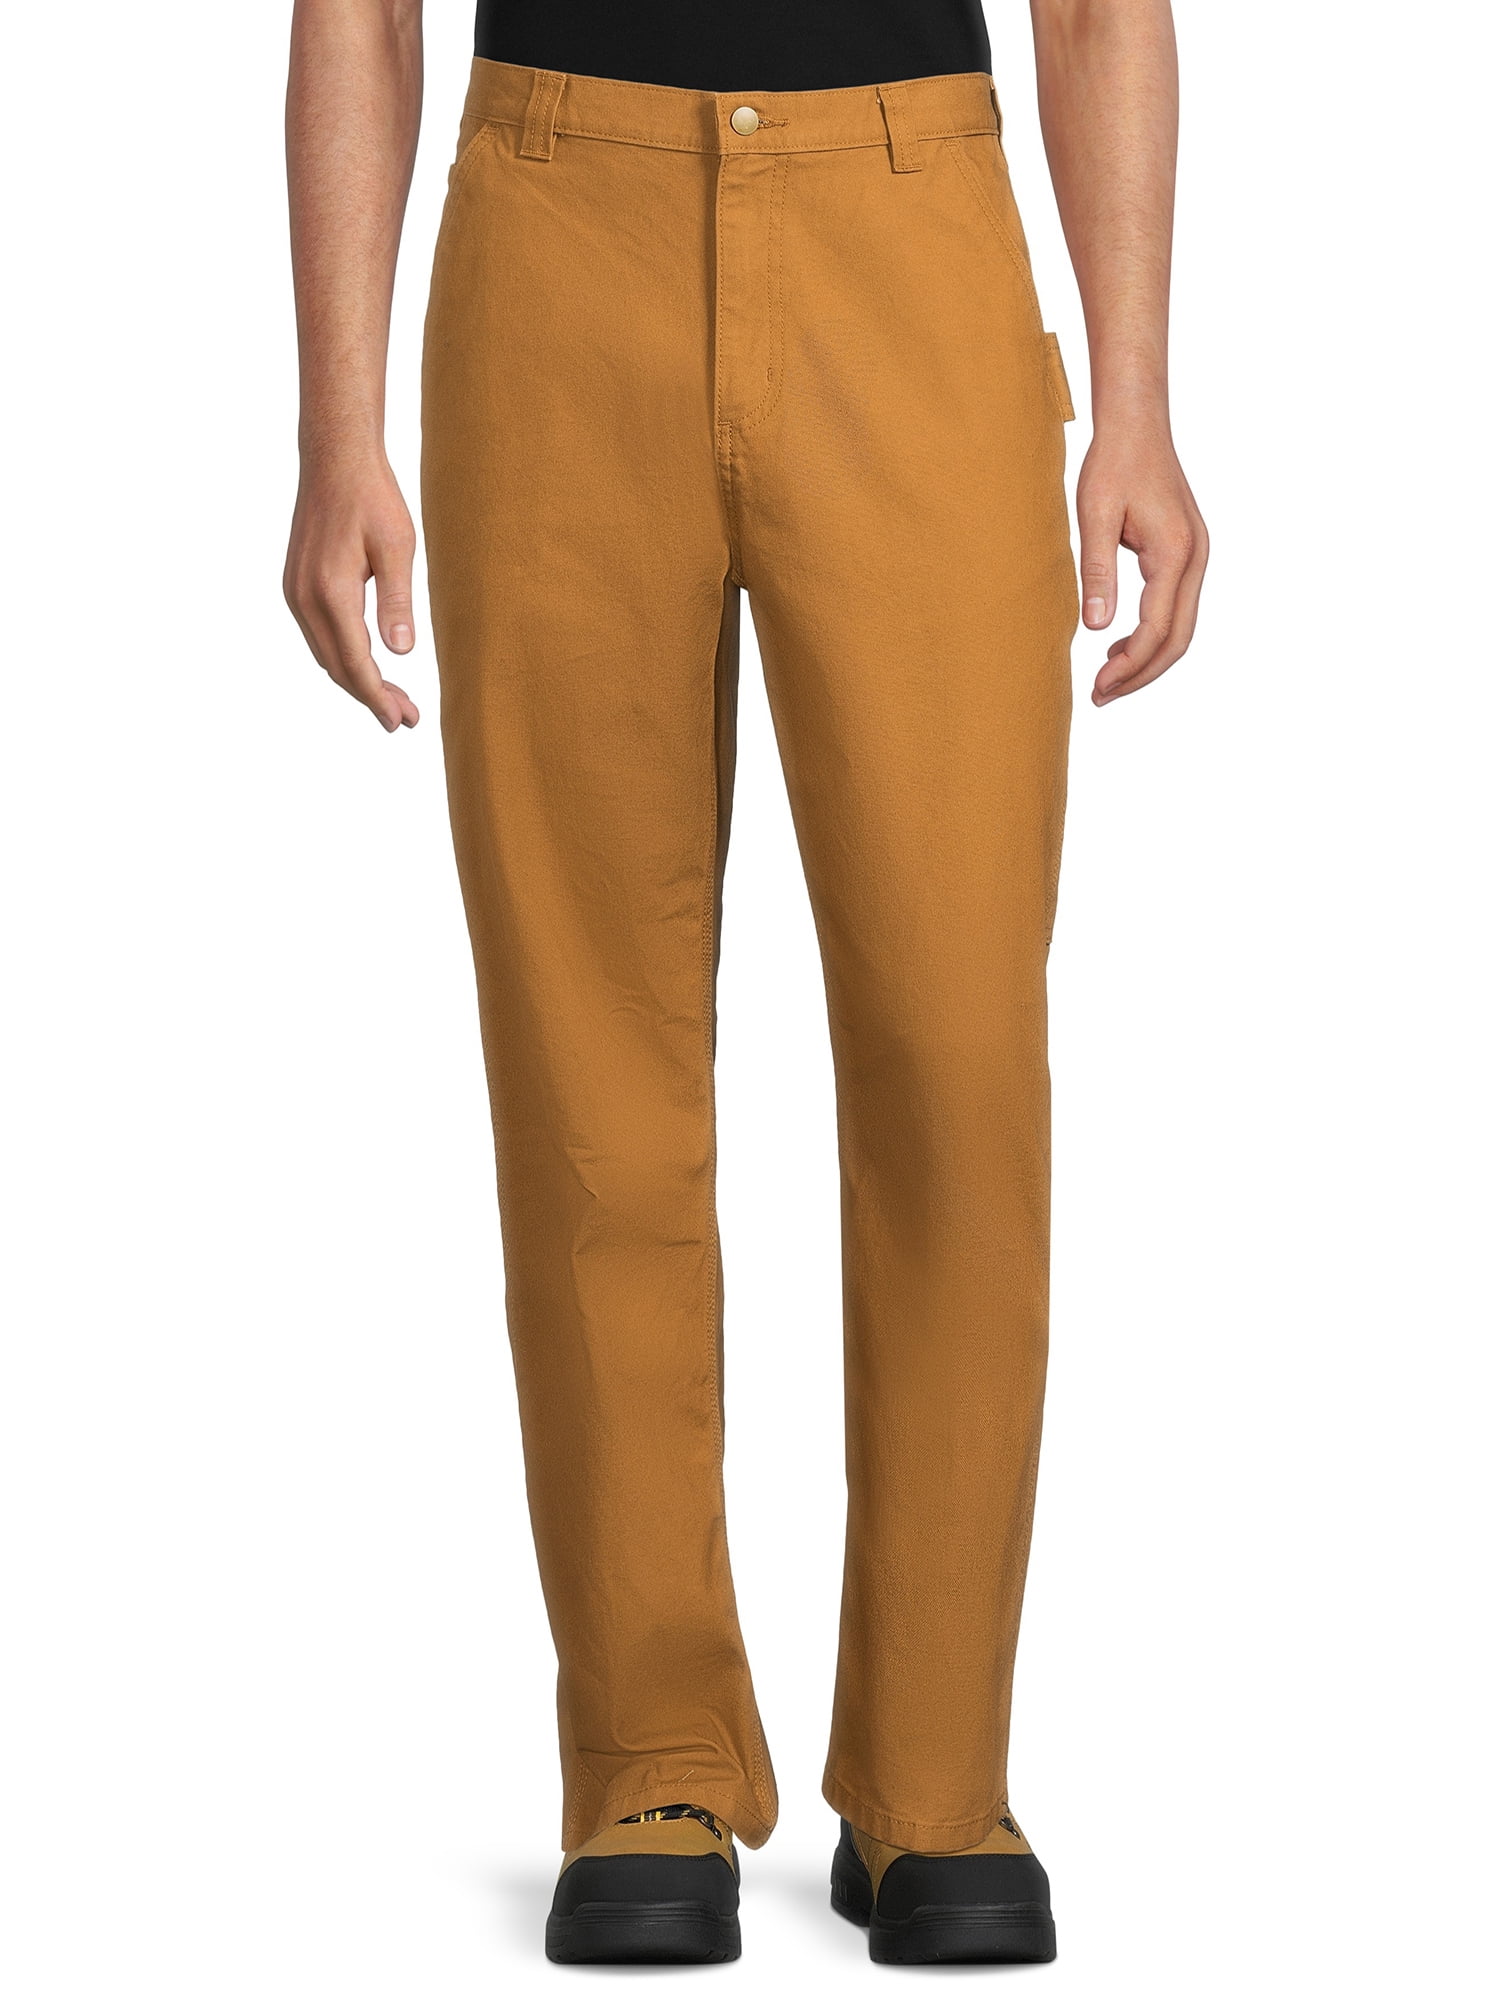 Shop the Best Carpenter Pants for Men Online at Low Prices